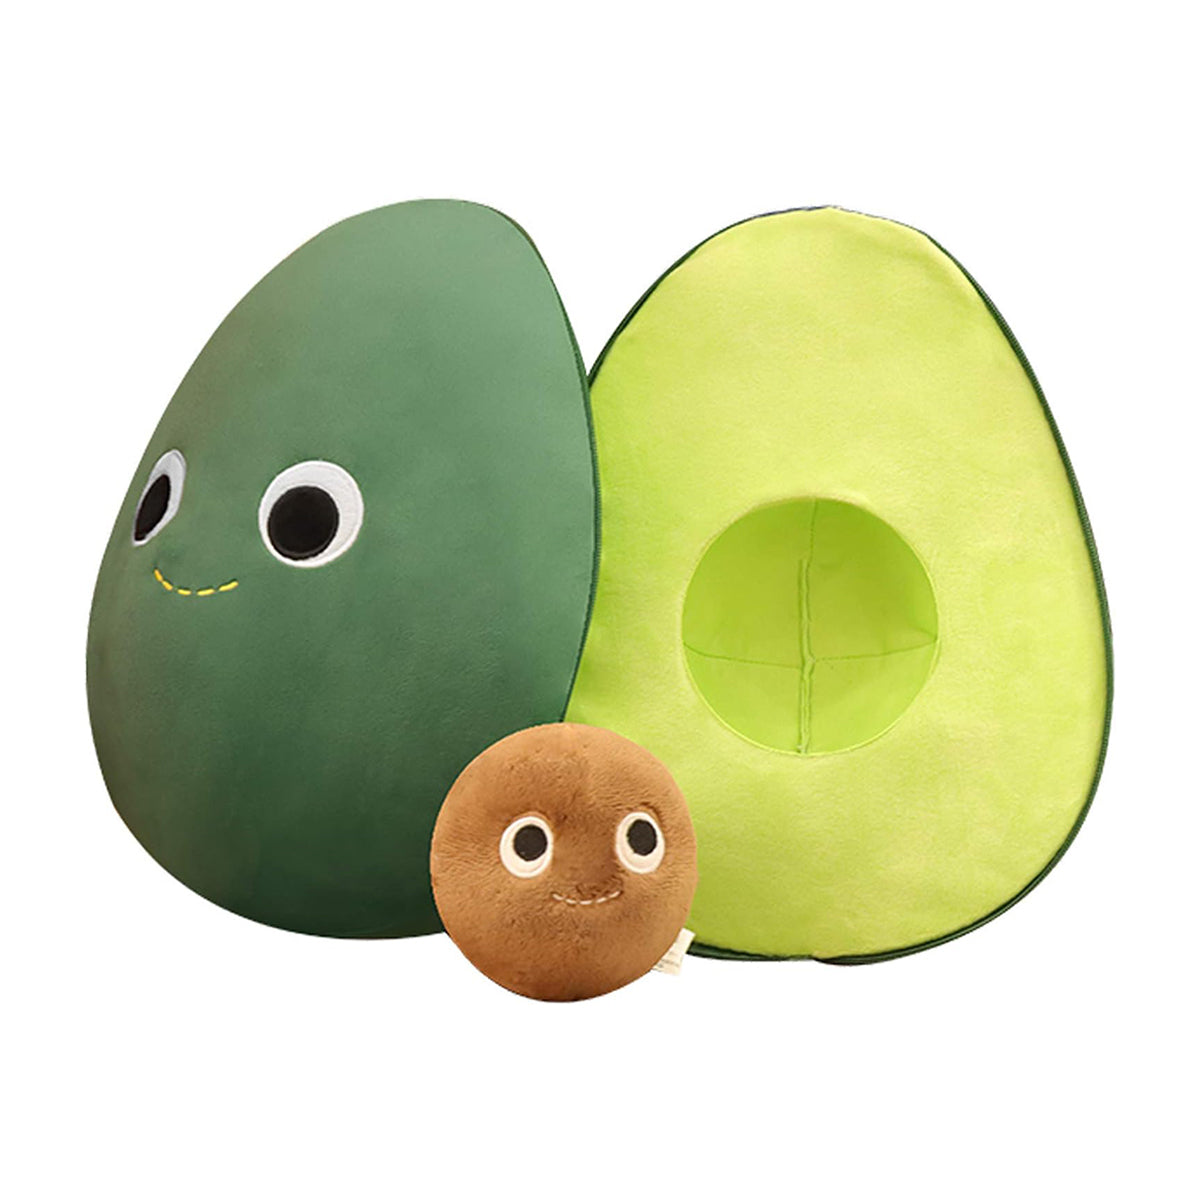 Cuttable Avocado Plush Toy，Interactive Avocado Stuffed Toy，Soft and Sliceable Plush Avocado，Playful Cut-and-Play Avocado，Adorable Plush Food Toy